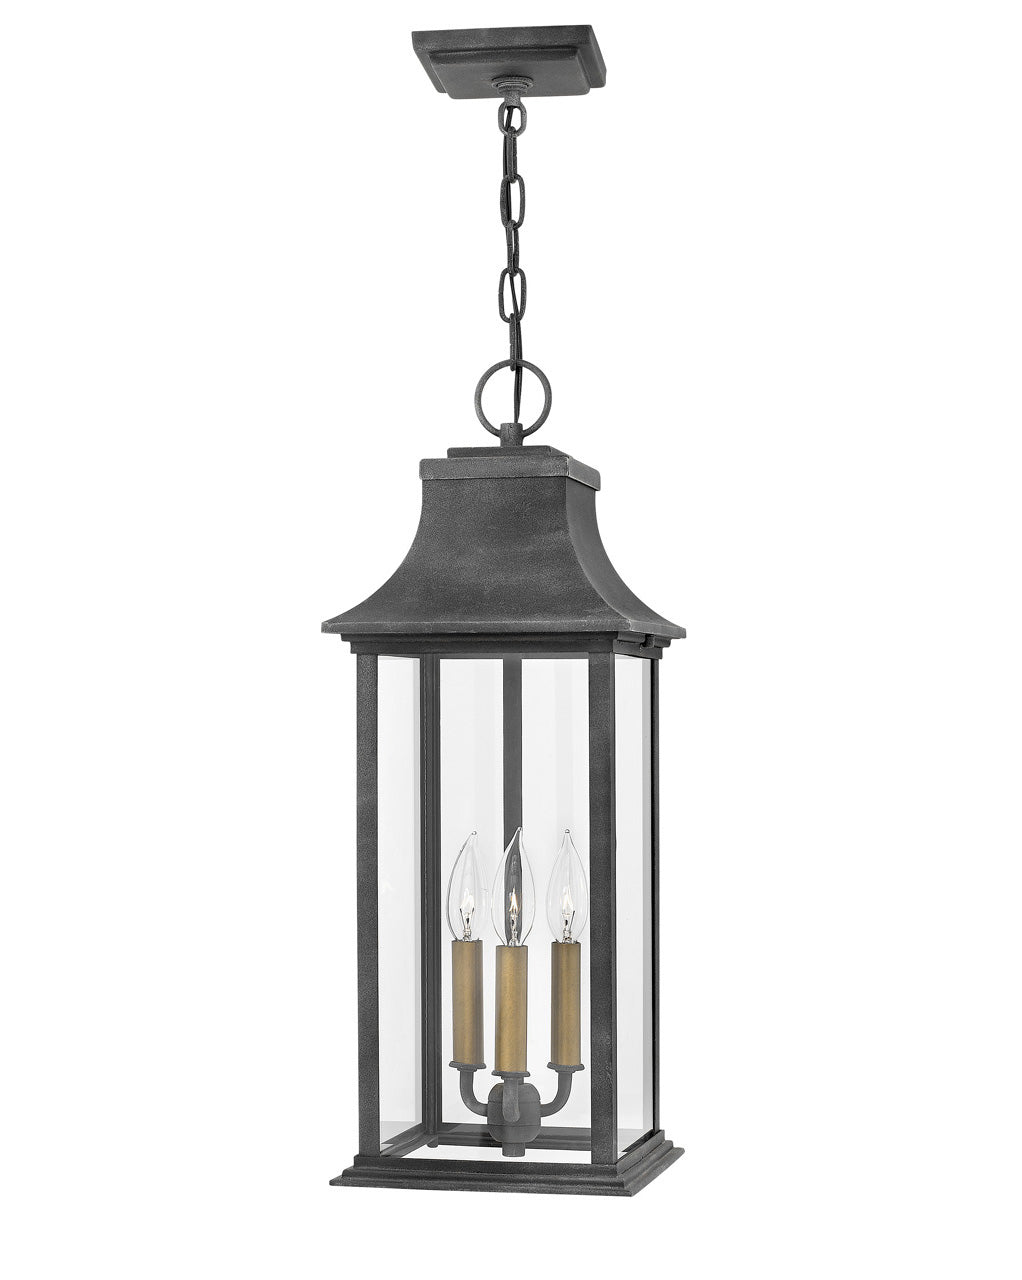 OUTDOOR ADAIR Hanging Lantern Outdoor Light Fixture l Hanging Hinkley Aged Zinc 8.5x8.5x23.0 